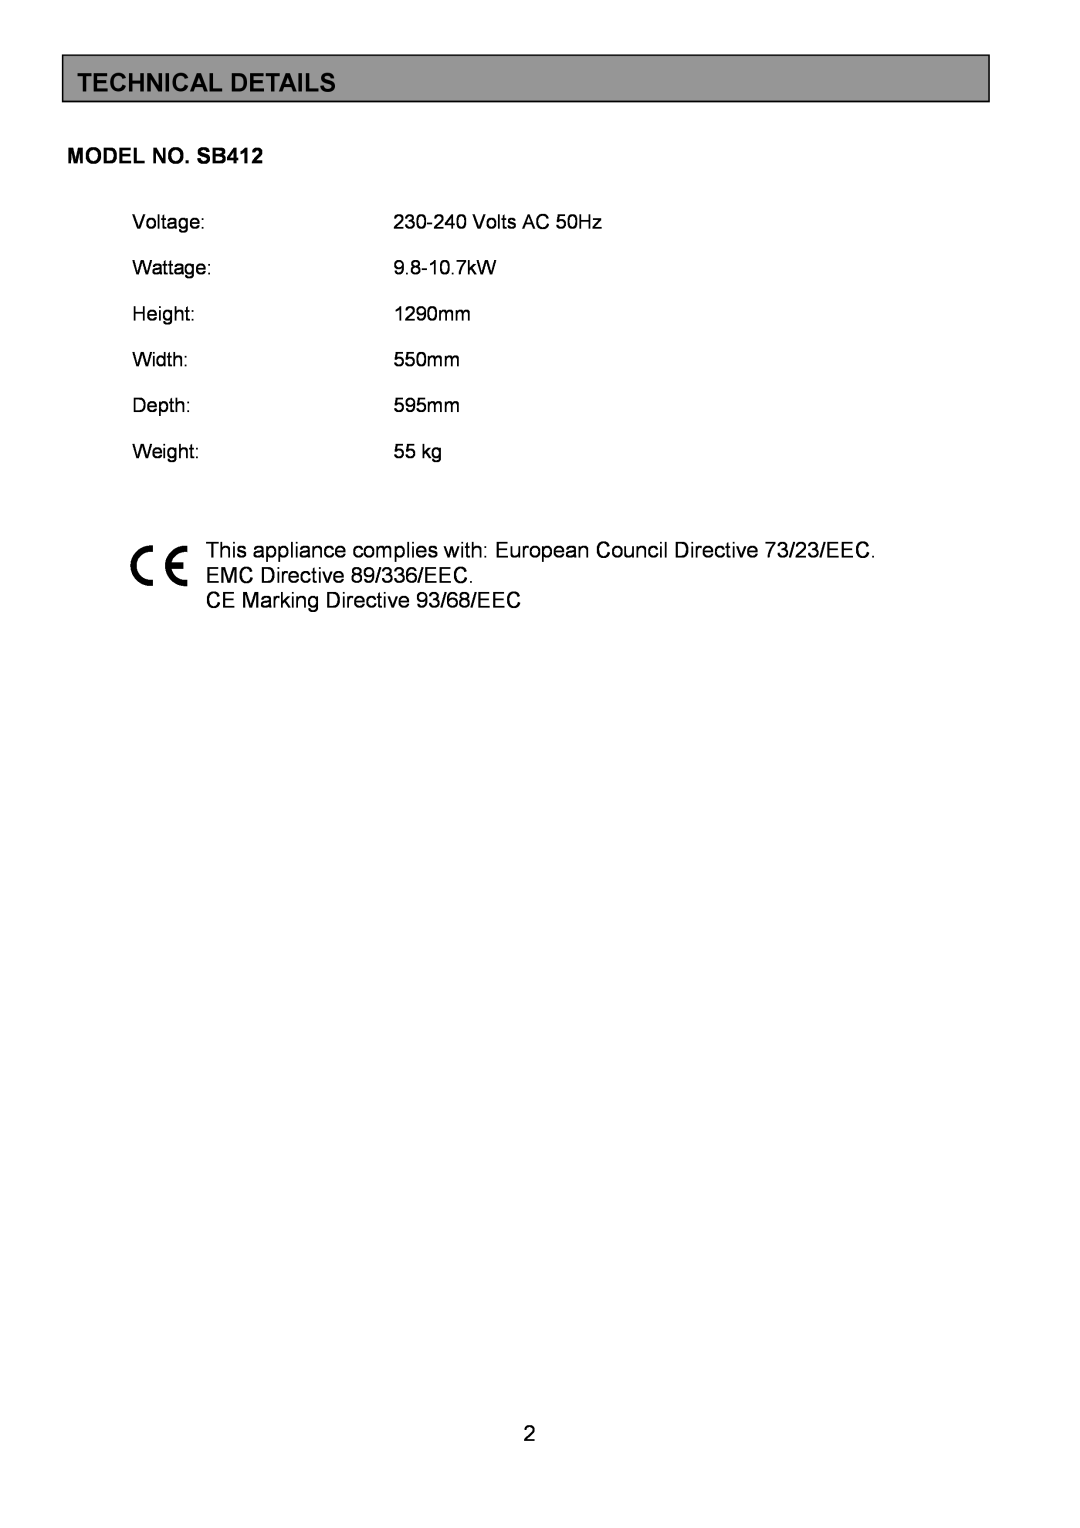 Tricity Bendix Technical Details, MODEL NO. SB412, Voltage, 230-240Volts AC 50Hz, Depth 595mm, Weight, 55 kg 